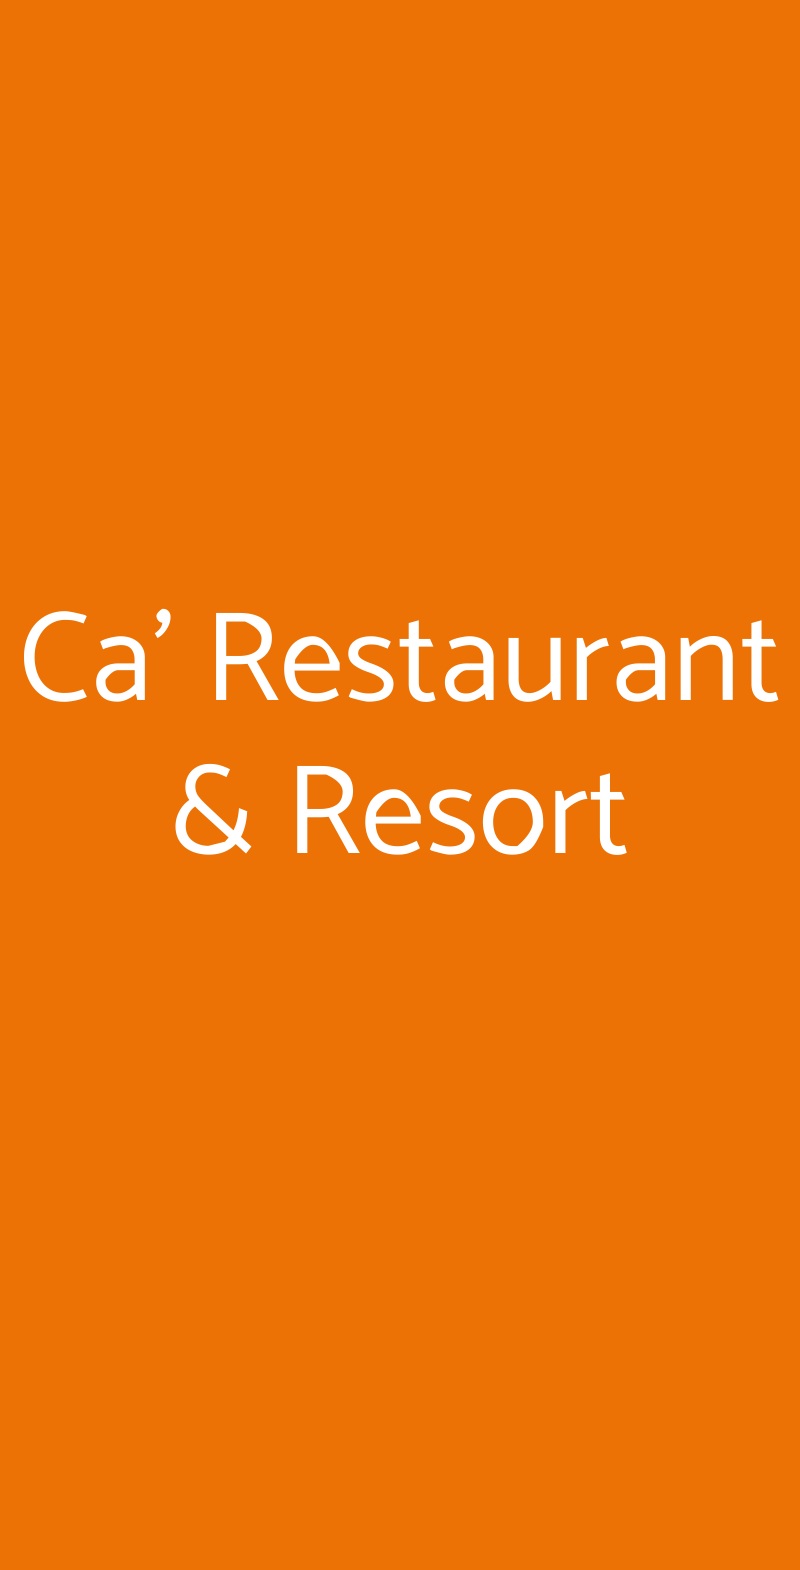 Ca' Restaurant & Resort Novare menù 1 pagina